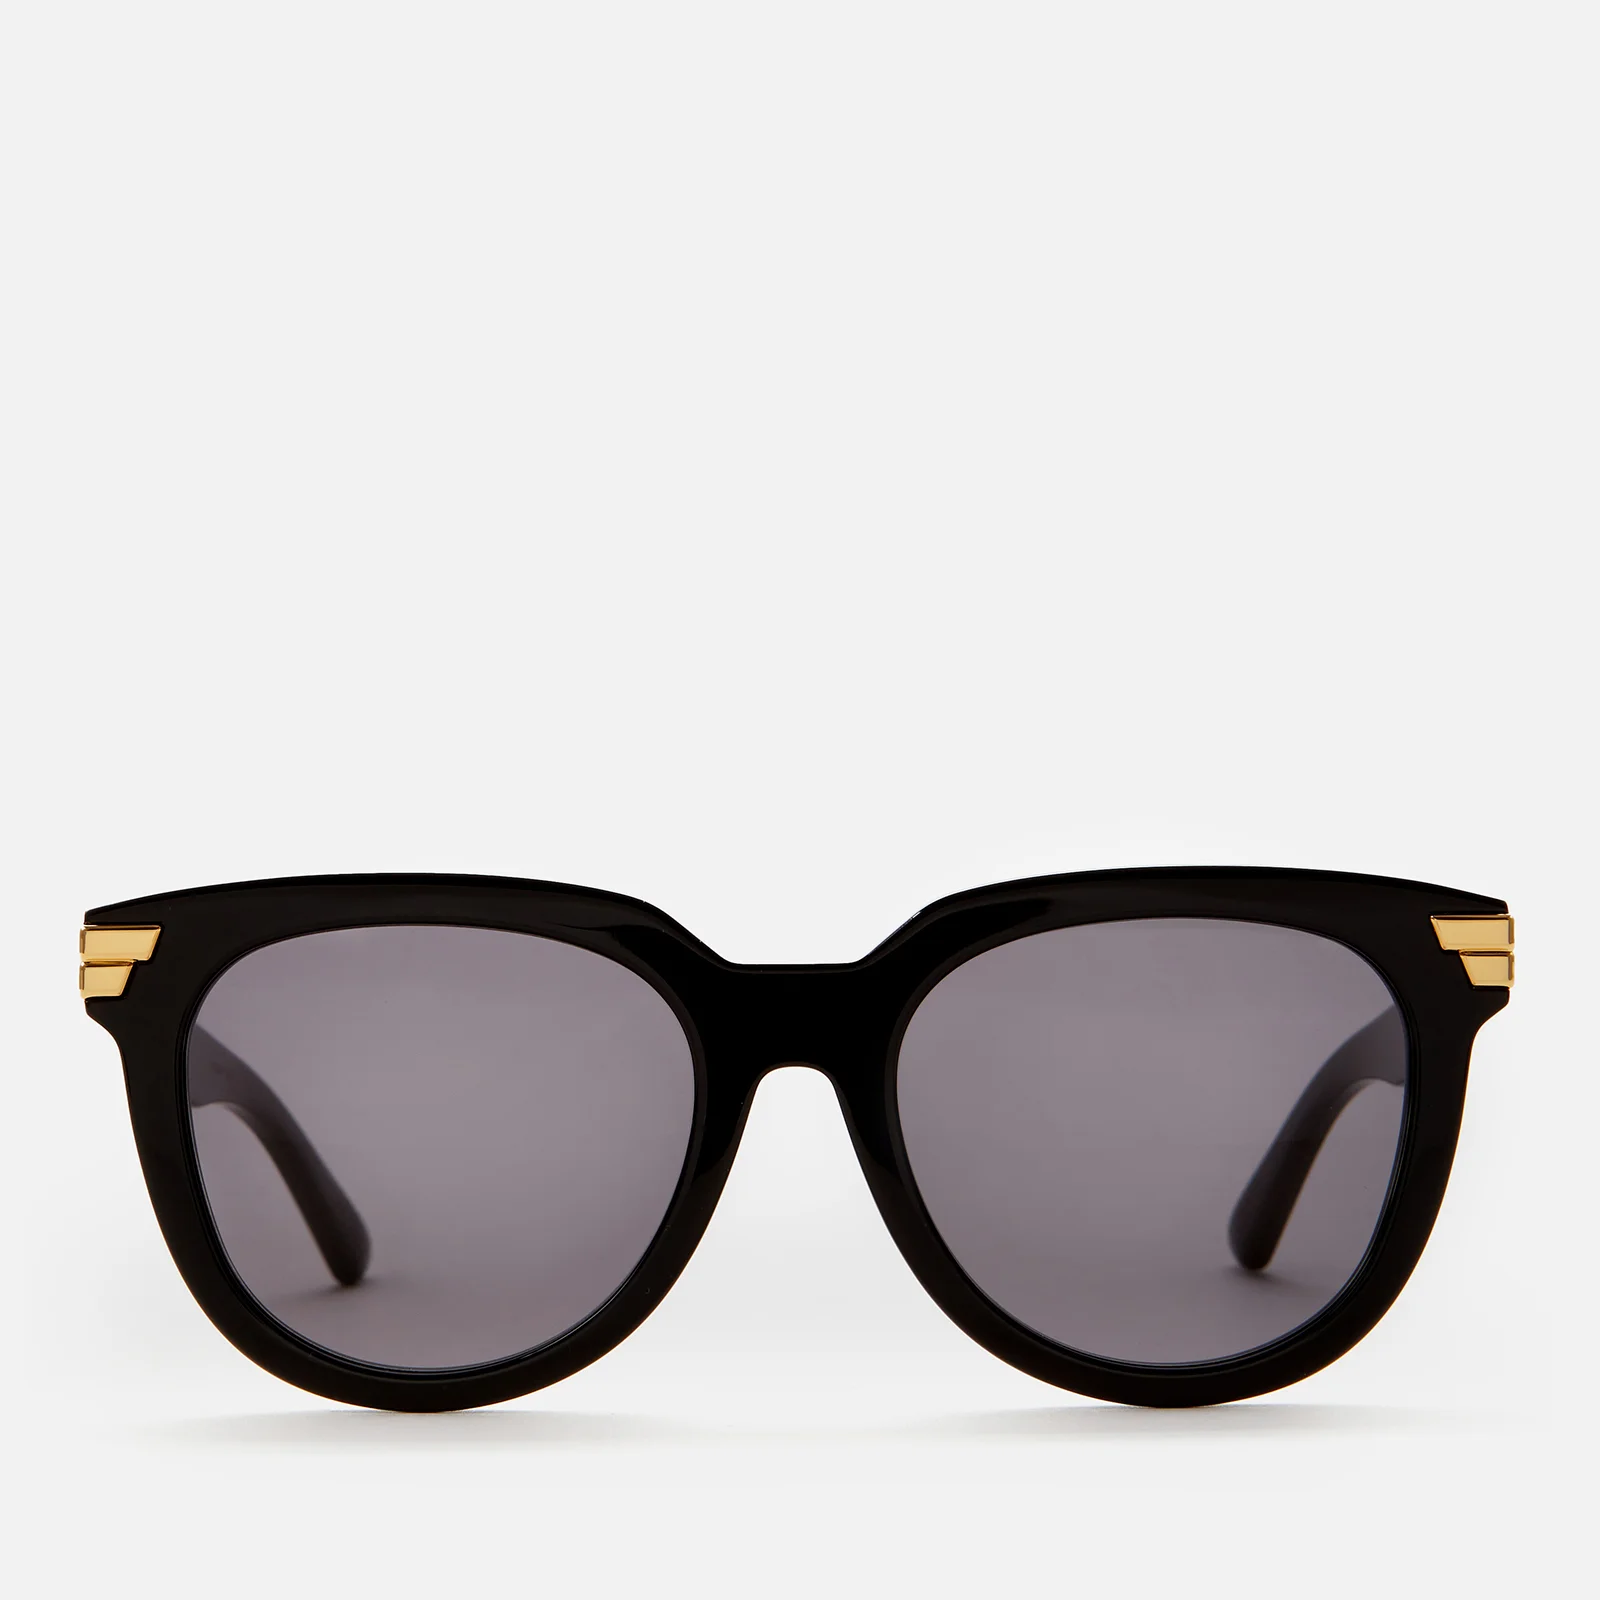 Bottega Veneta Women's Round Acetate Sunglasses - Black/Grey Image 1